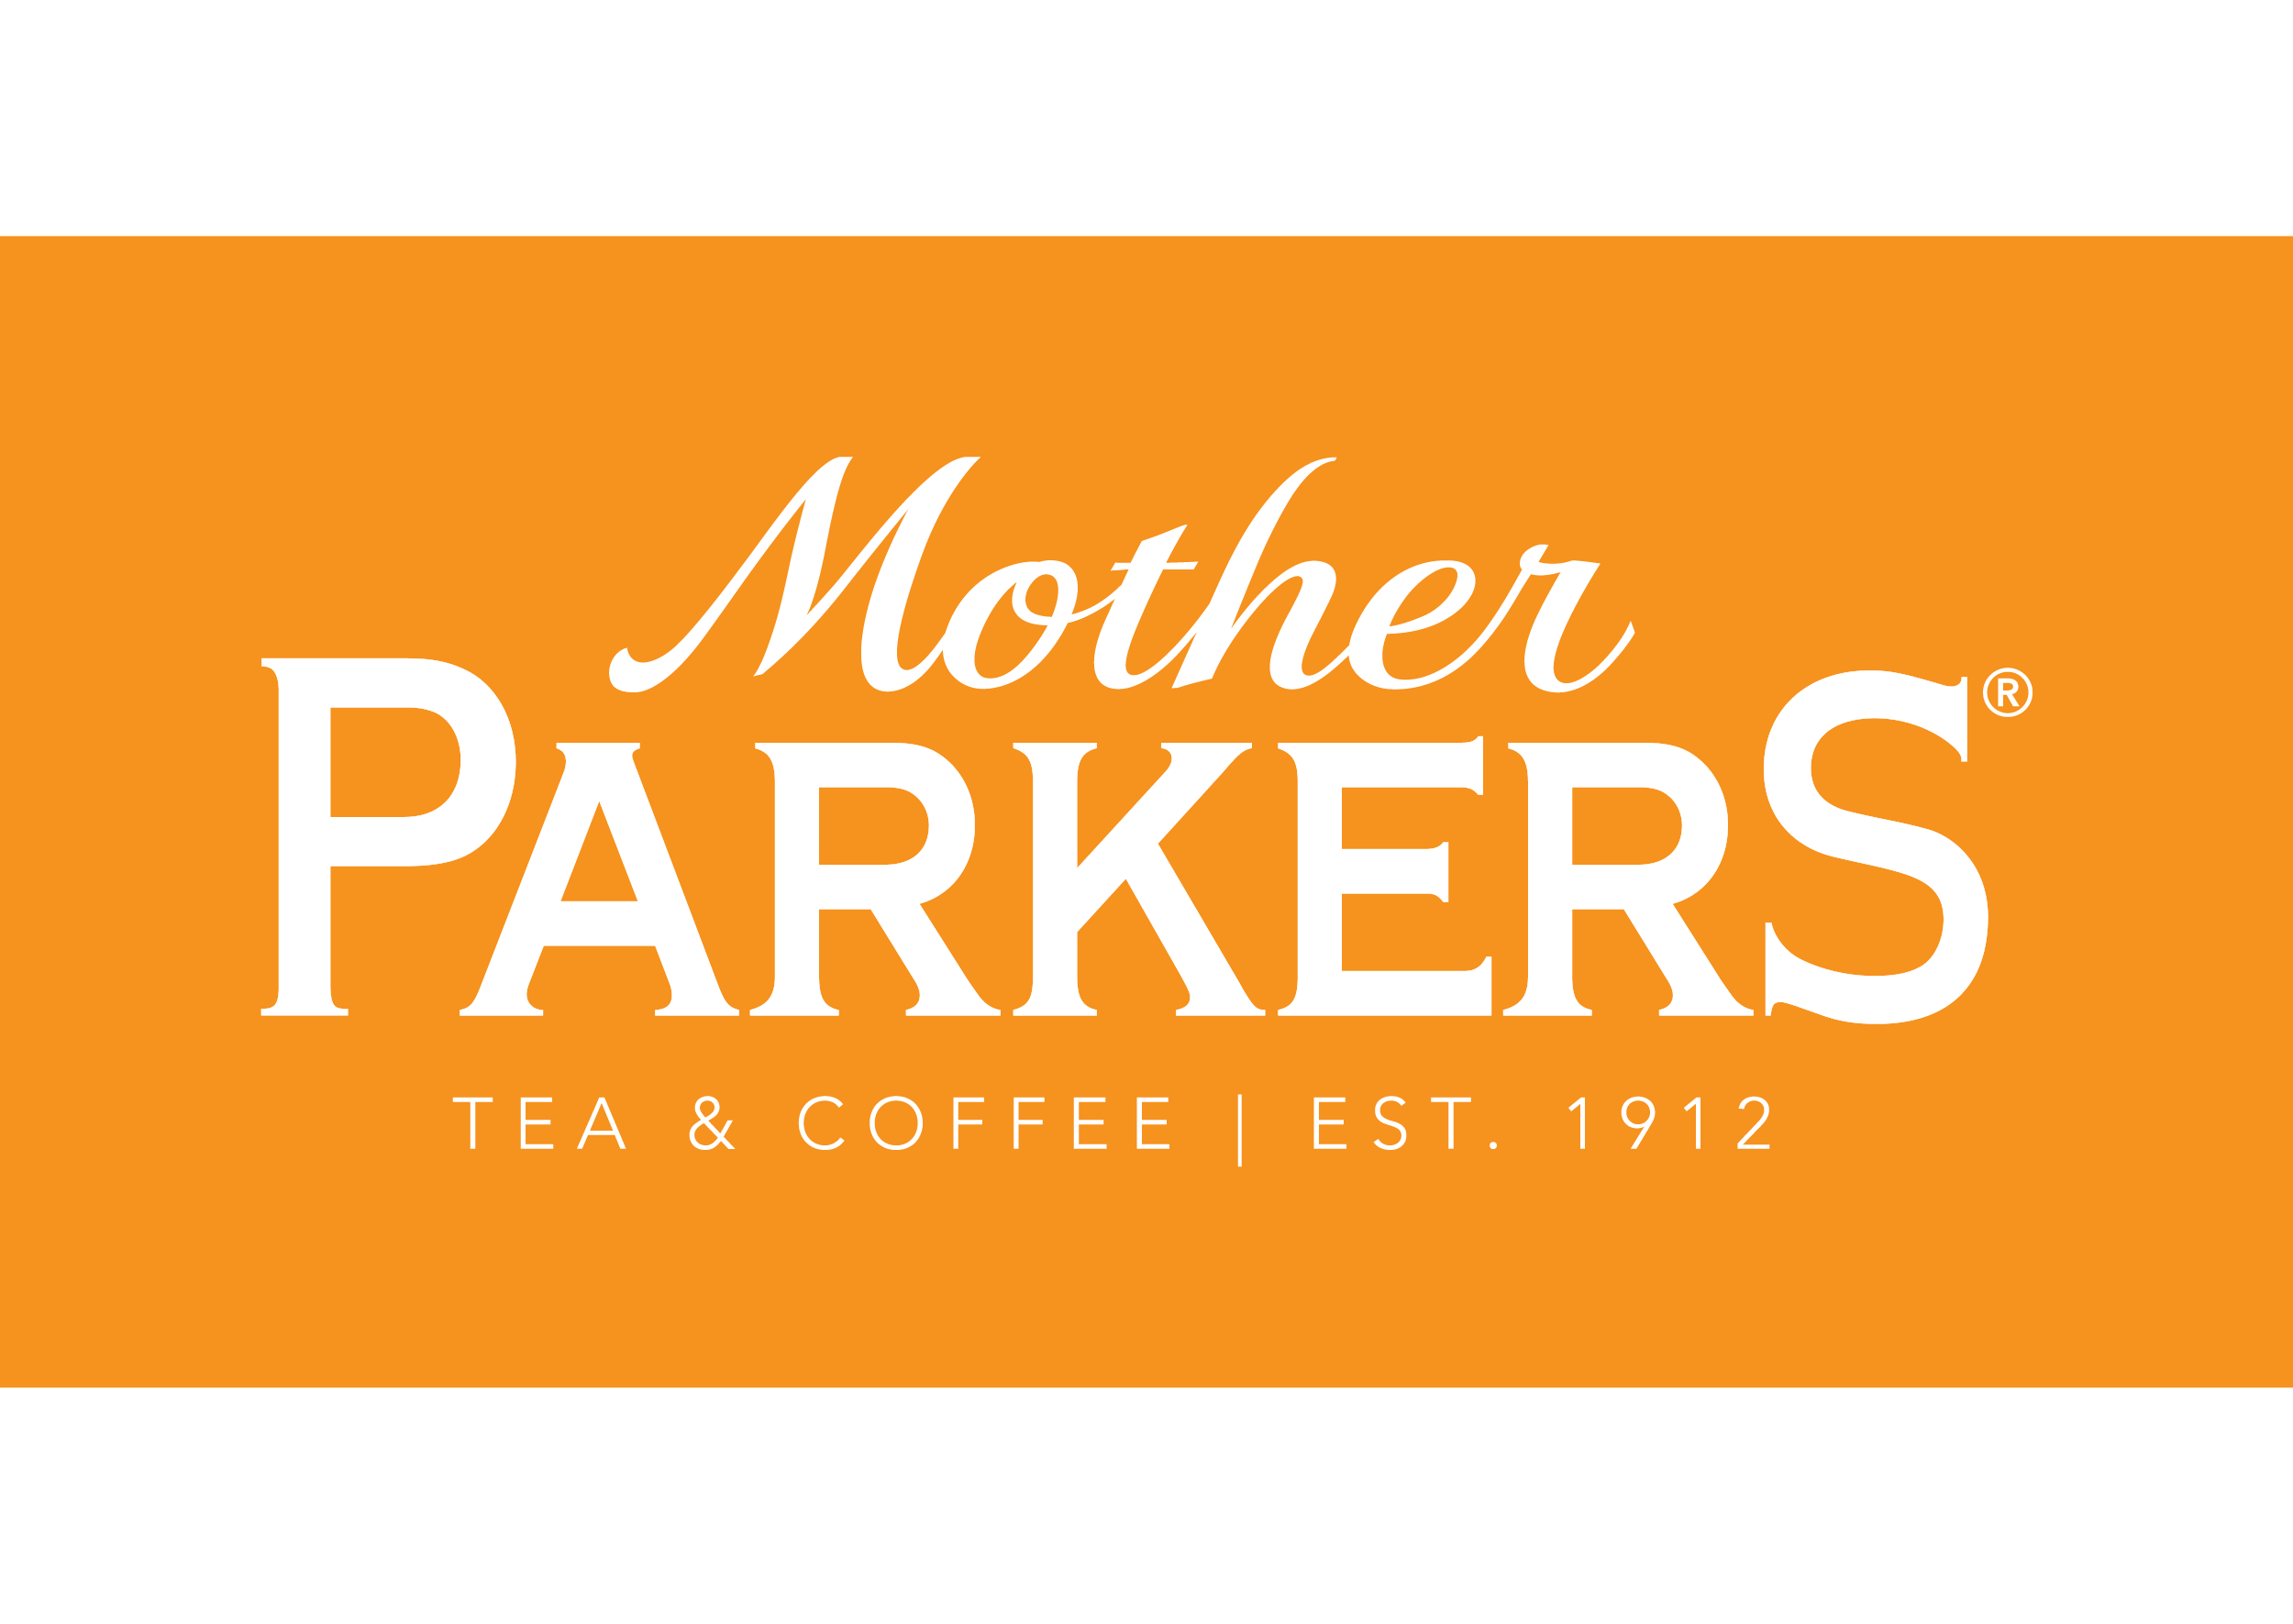 Olivan Marketing Partner - Mother Parkers Tea & Coffee